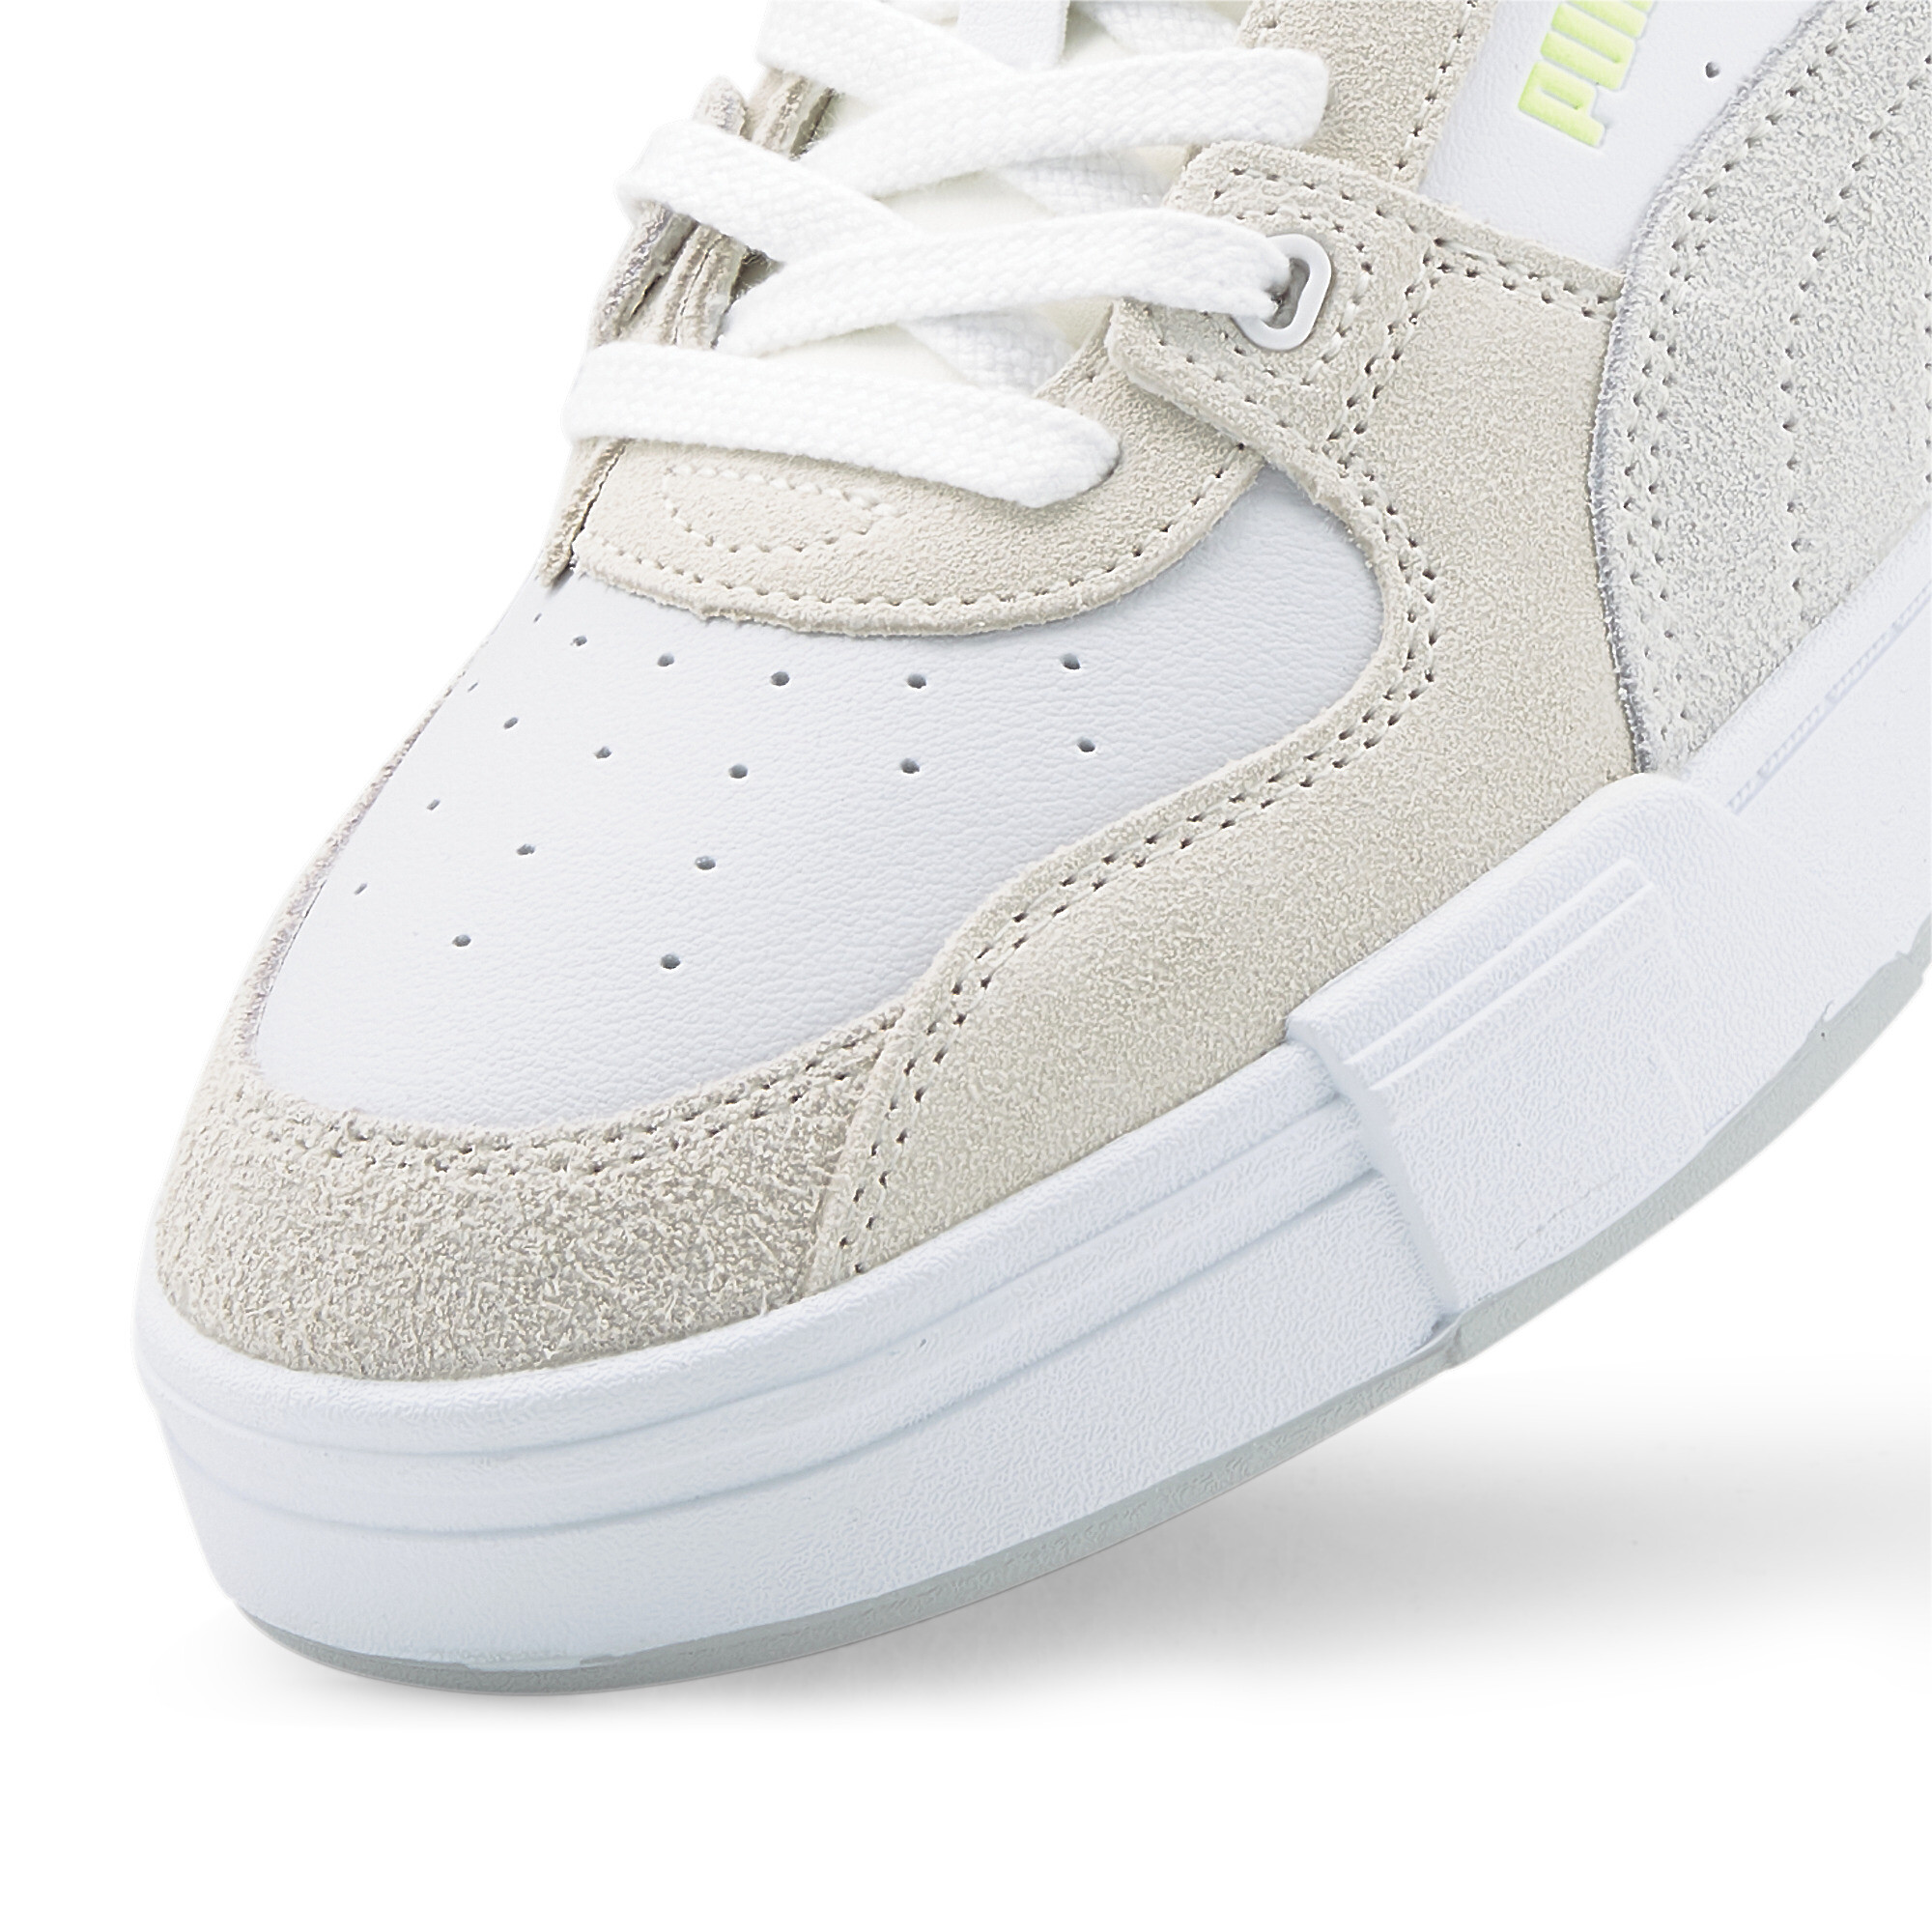 Men's Puma CA Pro Glitch Suede Sneakers, White, Size 44.5, Shoes